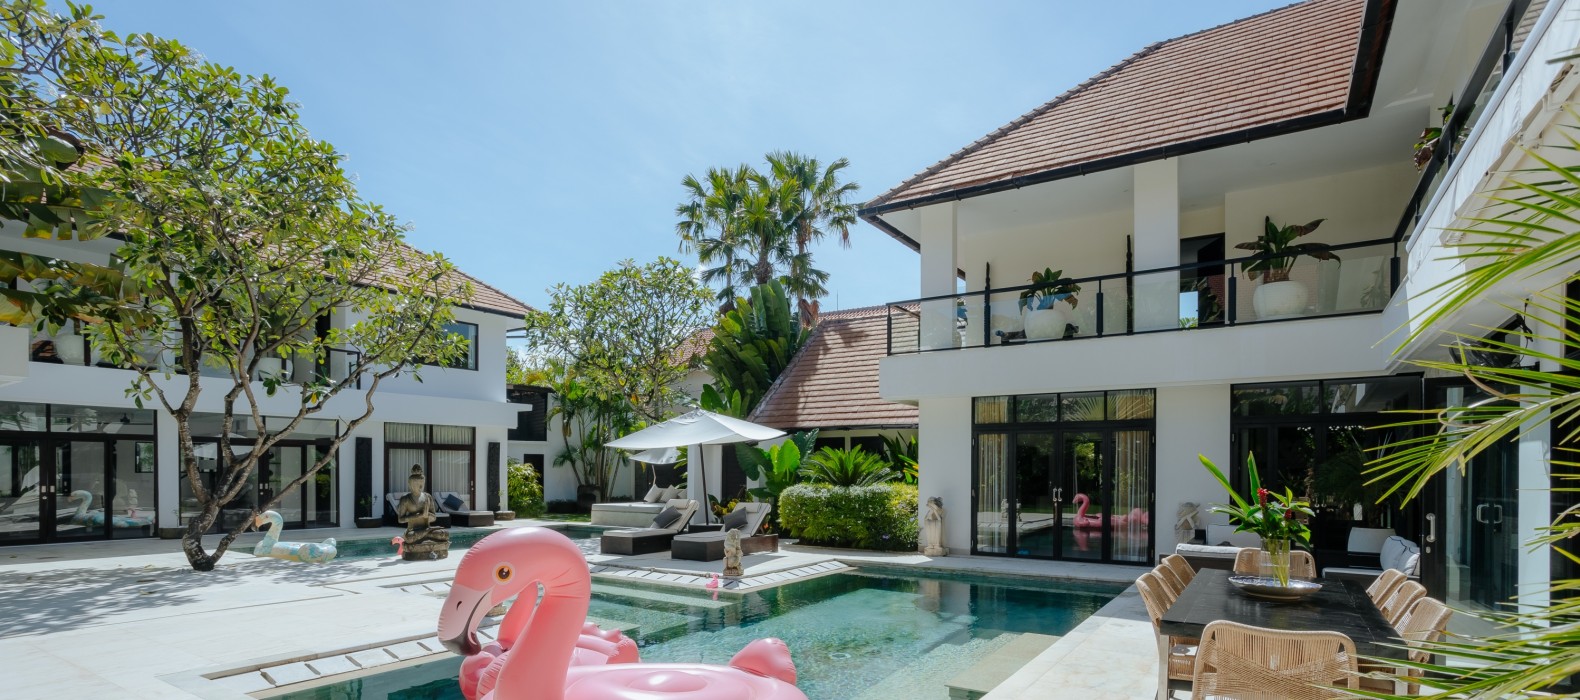 Exterior villa view of Villa Groven in Bali